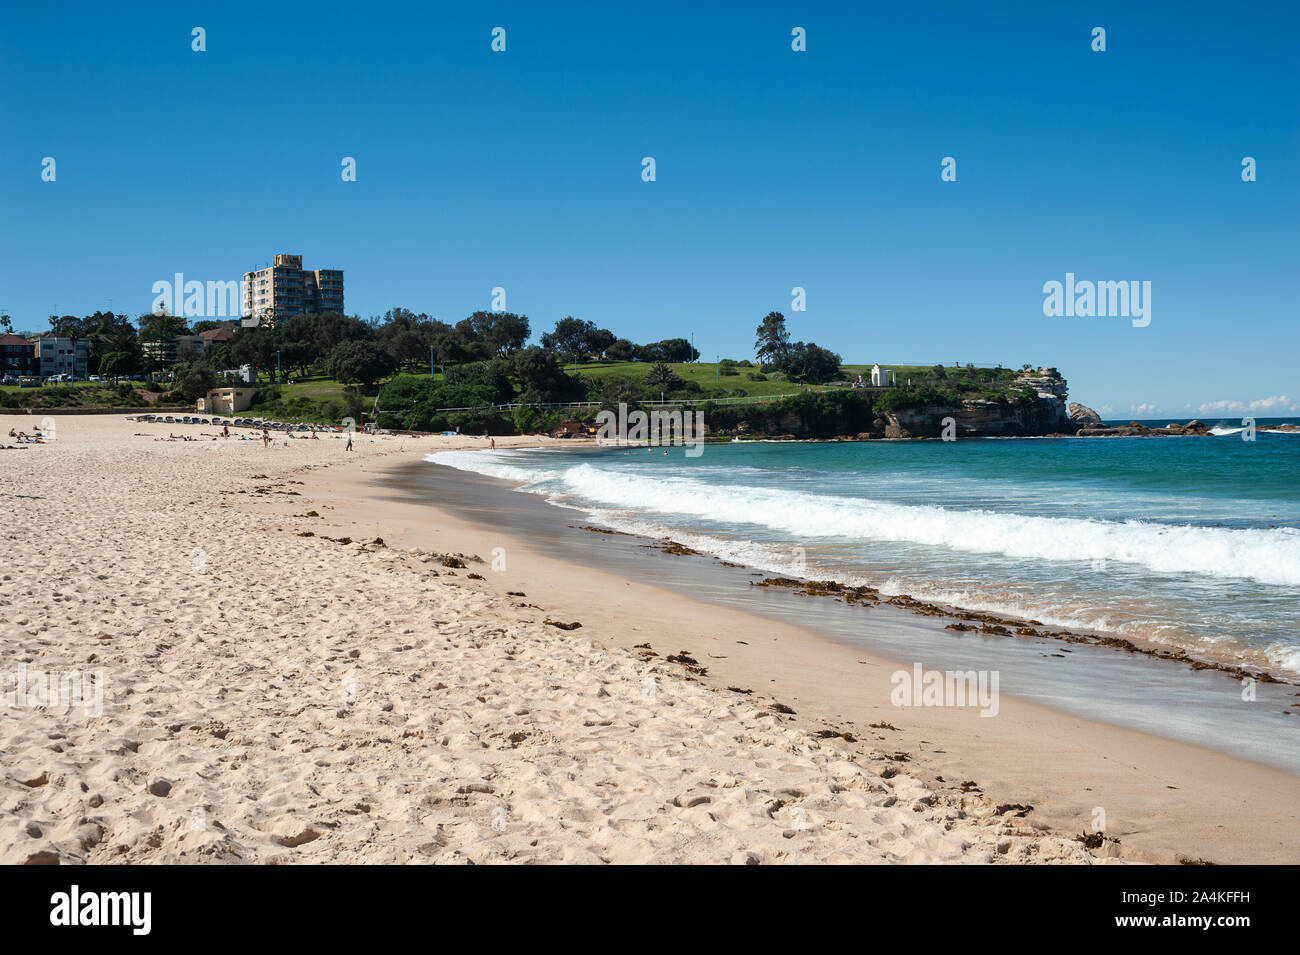 24.09.2019, Sydney, New South Wales, Australia - Sun sand and sea under a clear blue sky on Coogee Beach. Stock Photo